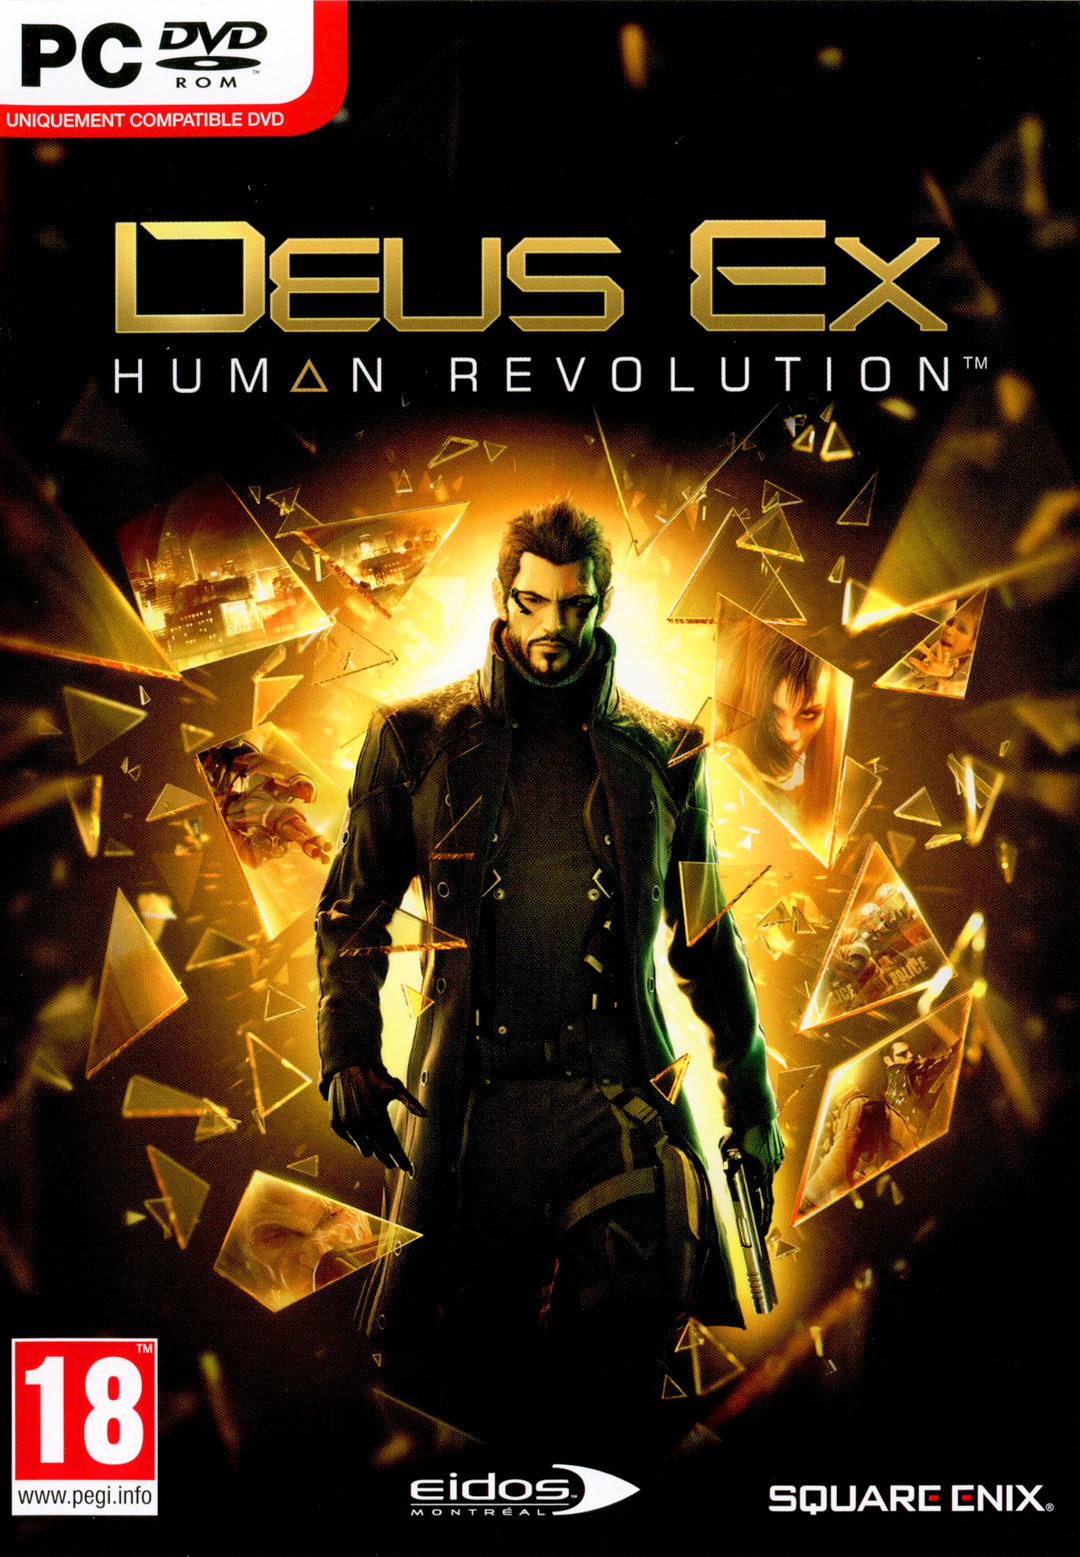 revolution - Deus Ex : Human Revolution + Crack + BONUS [PC | ISO ](Exclue) |FS] [US] [WU] Jaquette-deus-ex-human-revolution-pc-cover-avant-g-1314277745